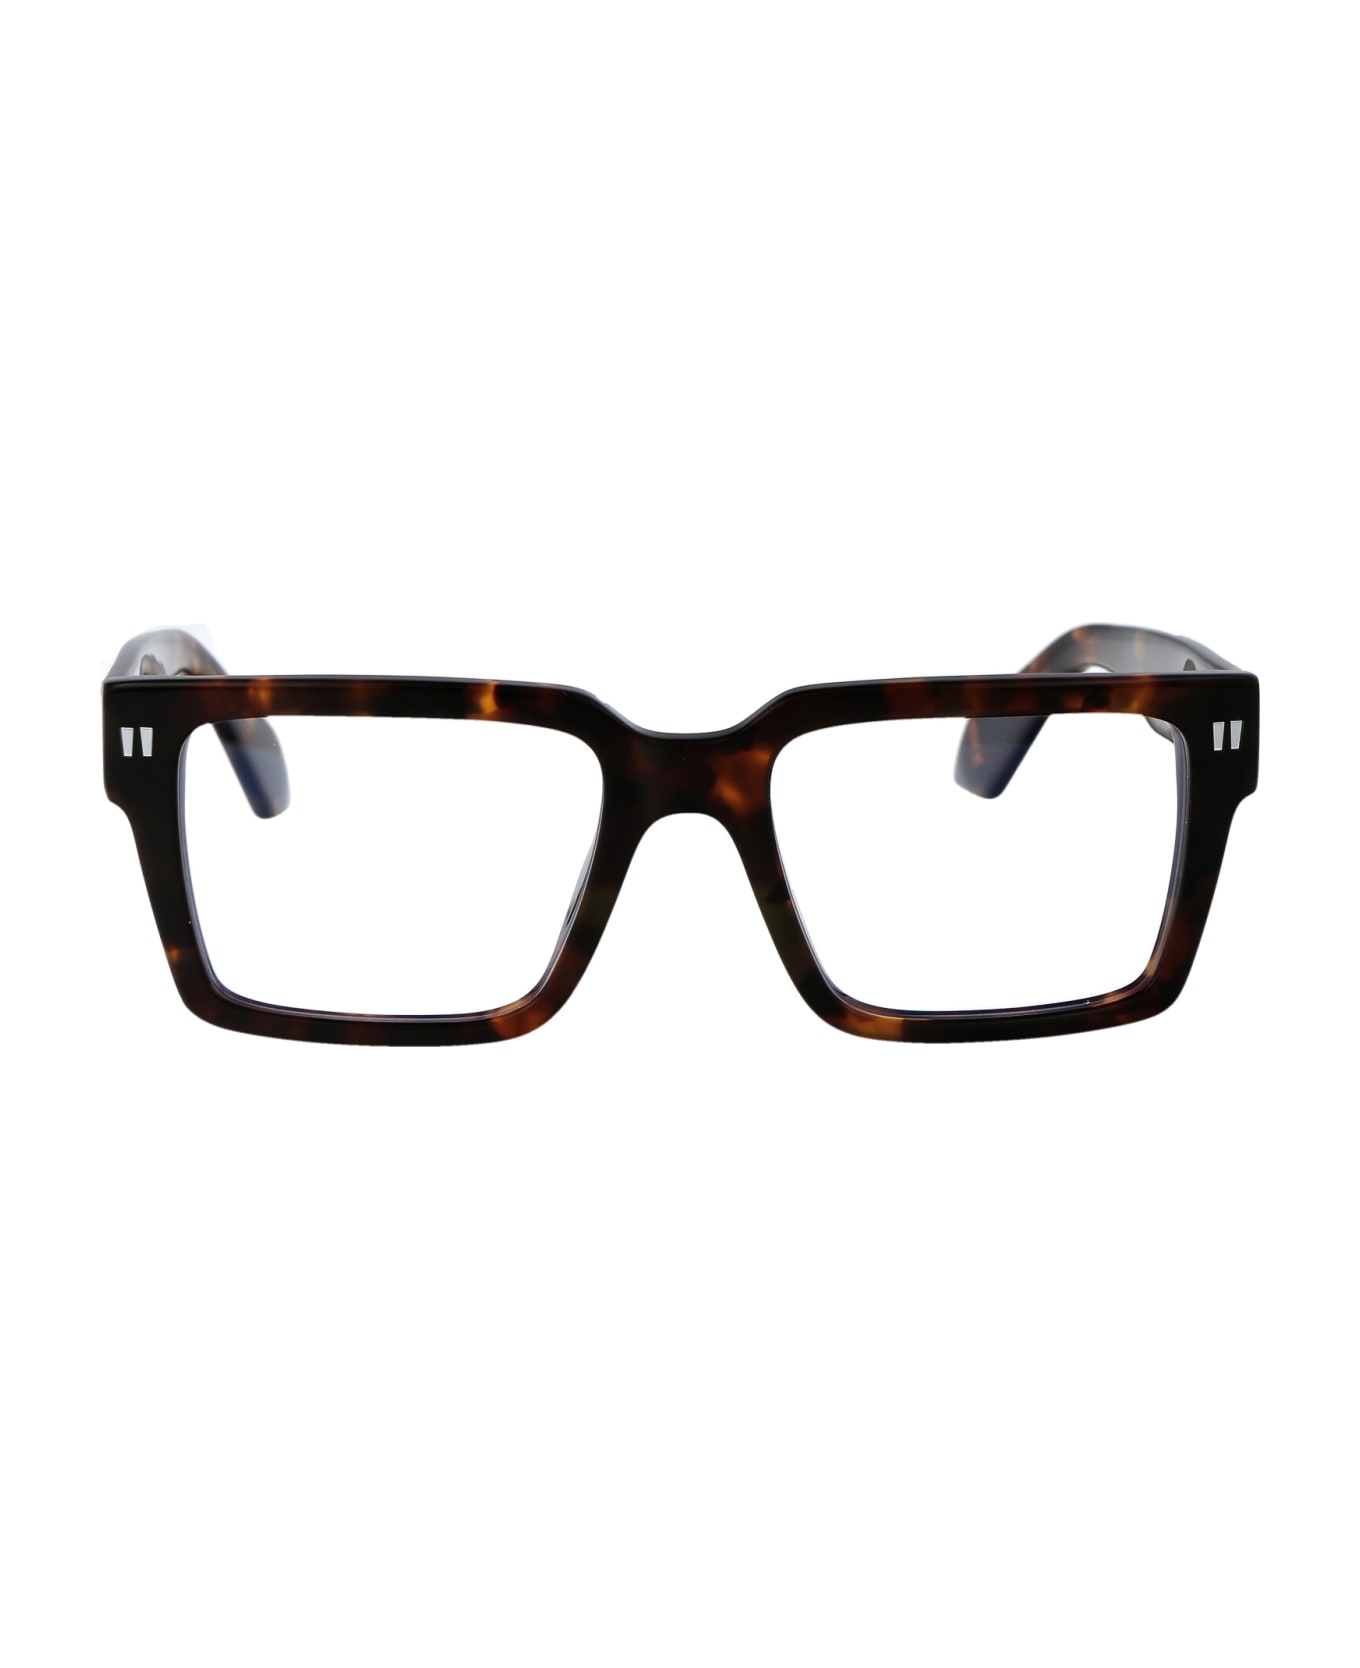 Off-White Optical Style 54 Glasses - 6000 HAVANA アイウェア